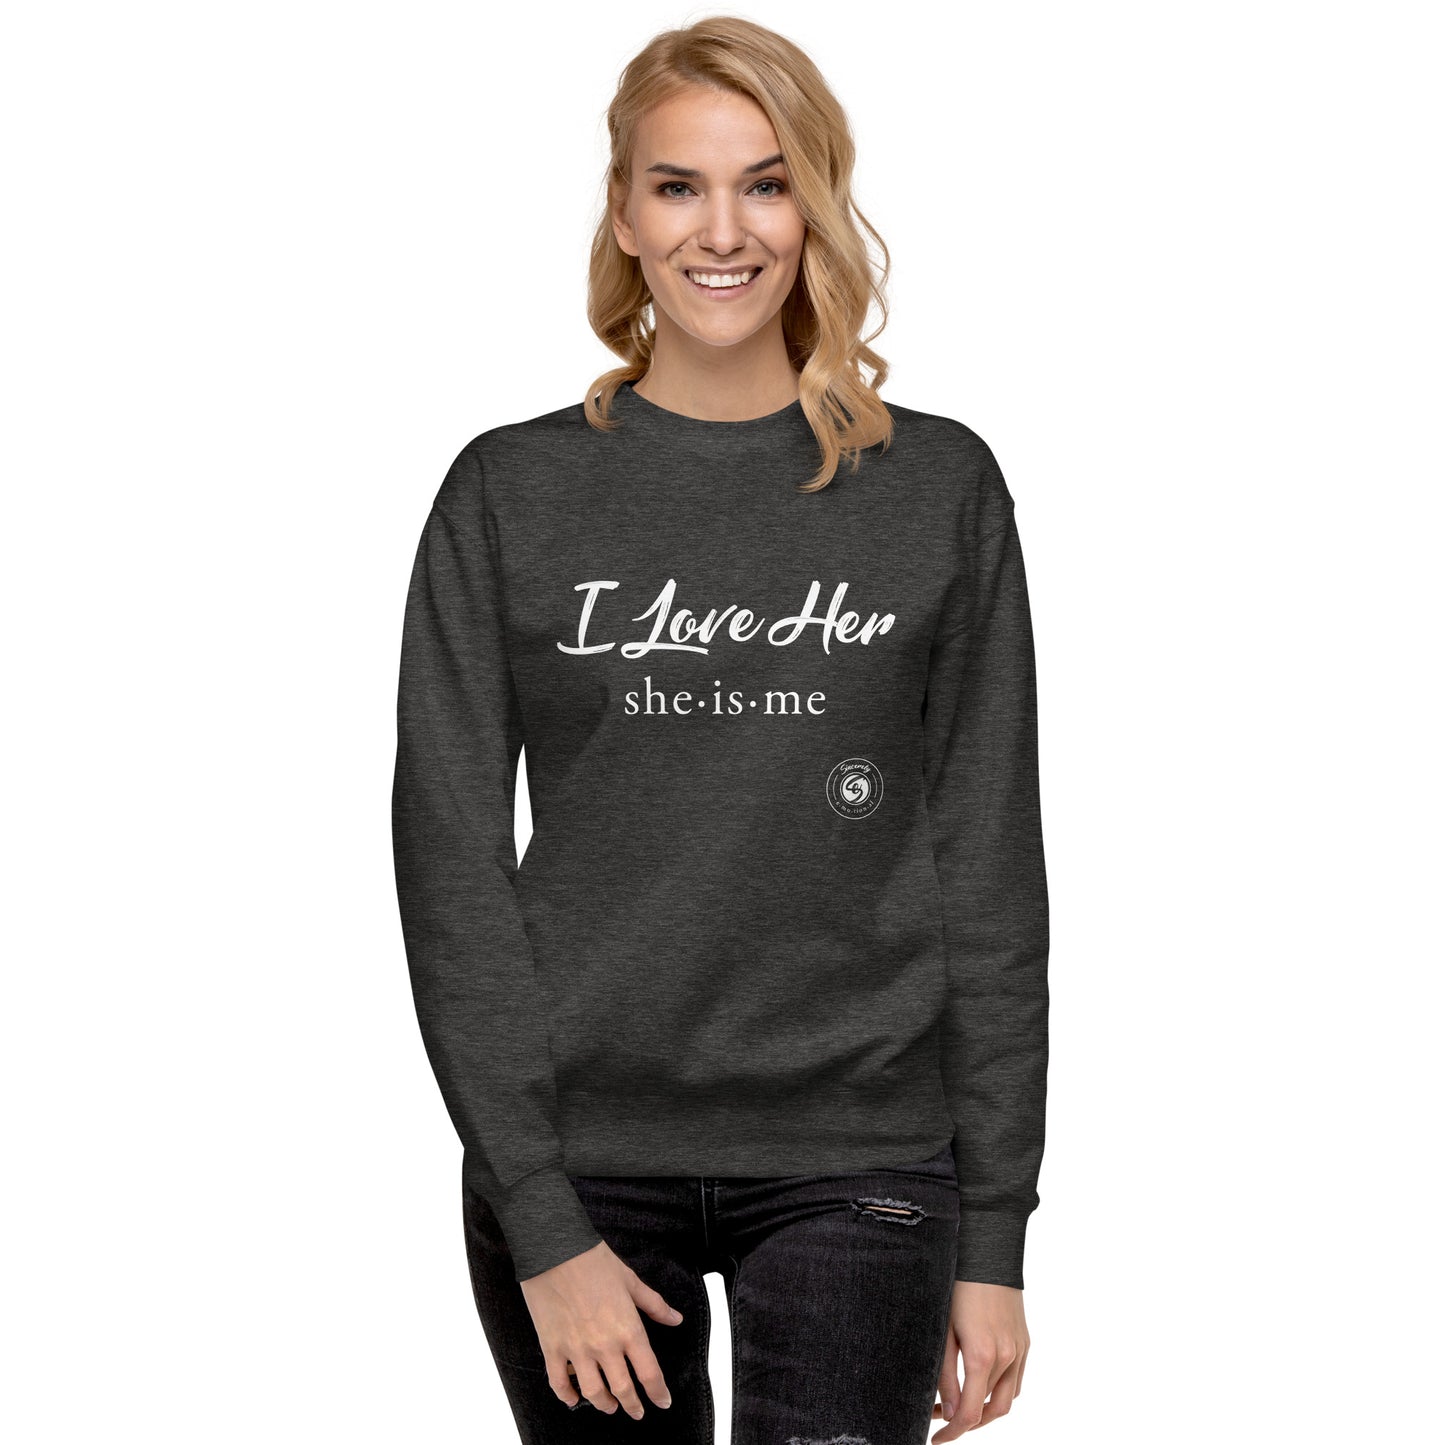 Sweatshirt....."I Love Her She-is-me"